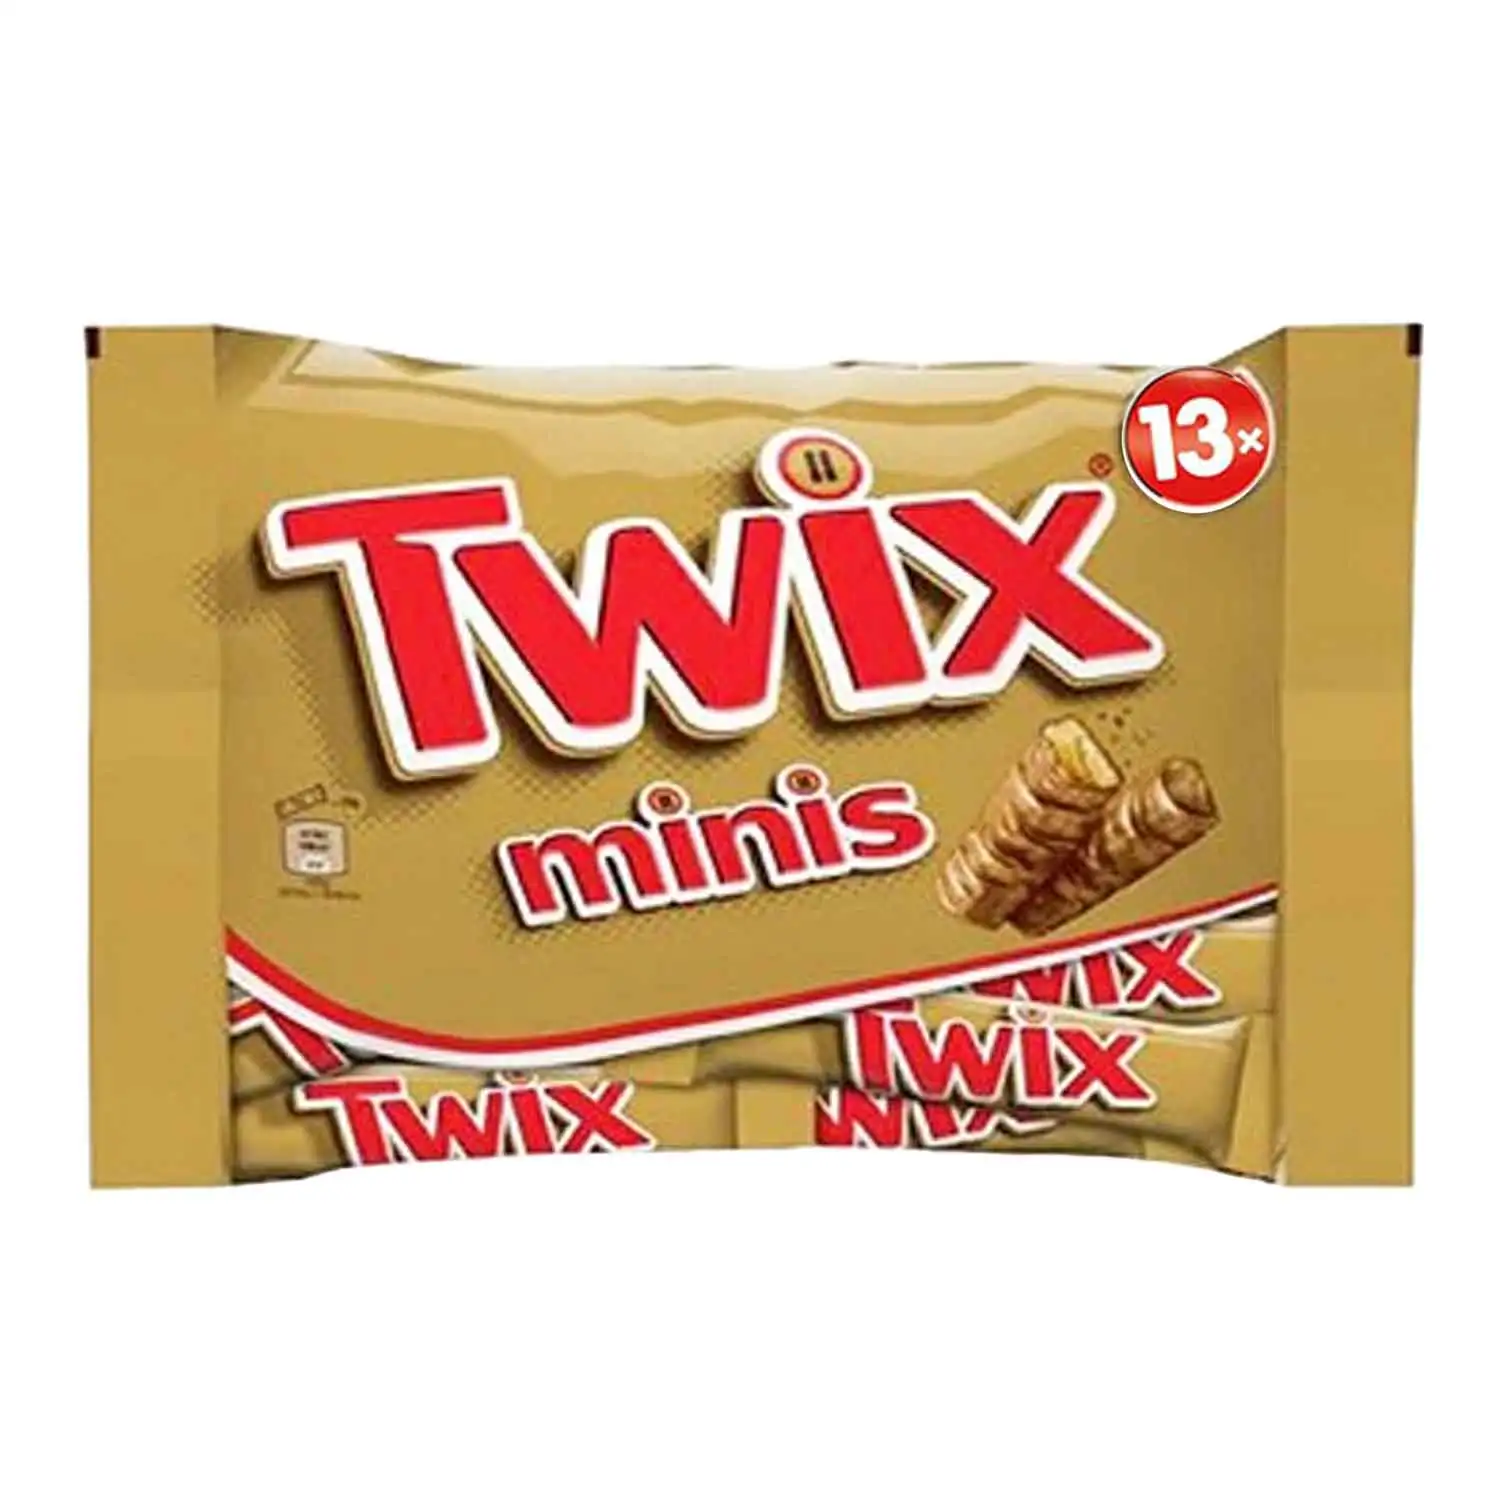 Twix minis 275g - Buy at Real Tobacco